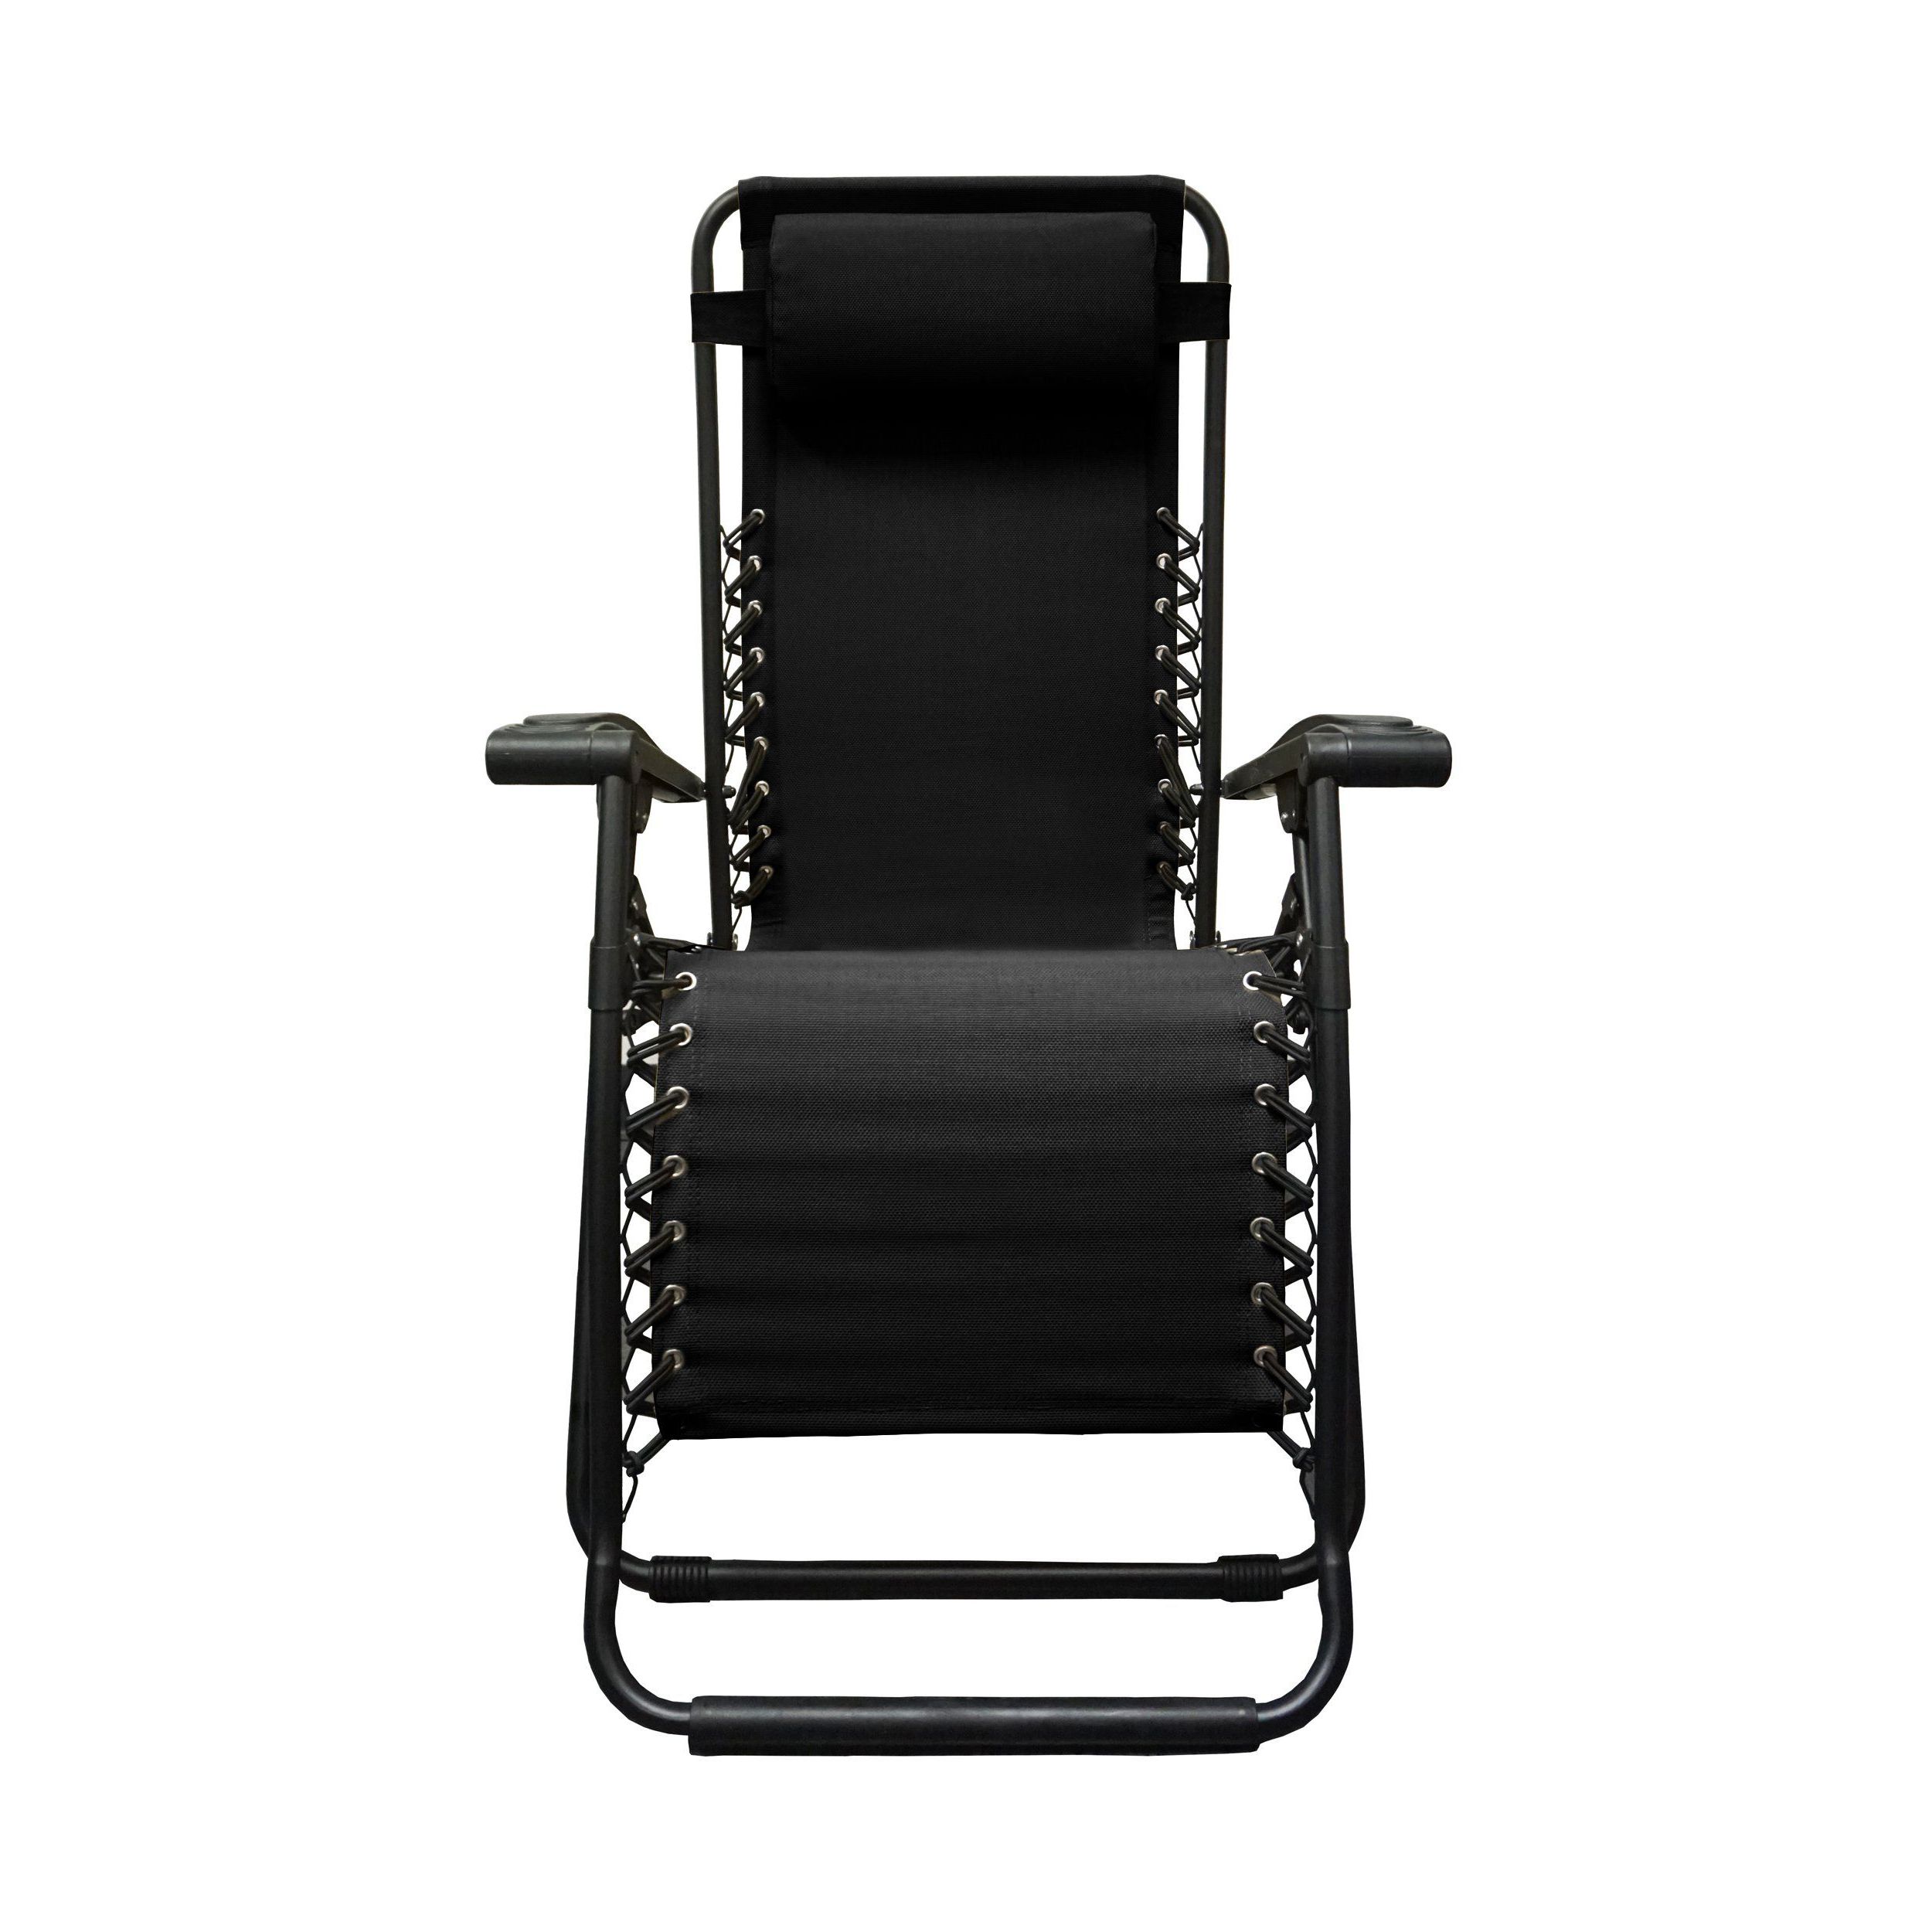 2019 Caravan Sports Infinity Zero Gravity Chair Patio Furniture Regarding Caravan Sports Grey Infinity Chairs (View 14 of 25)